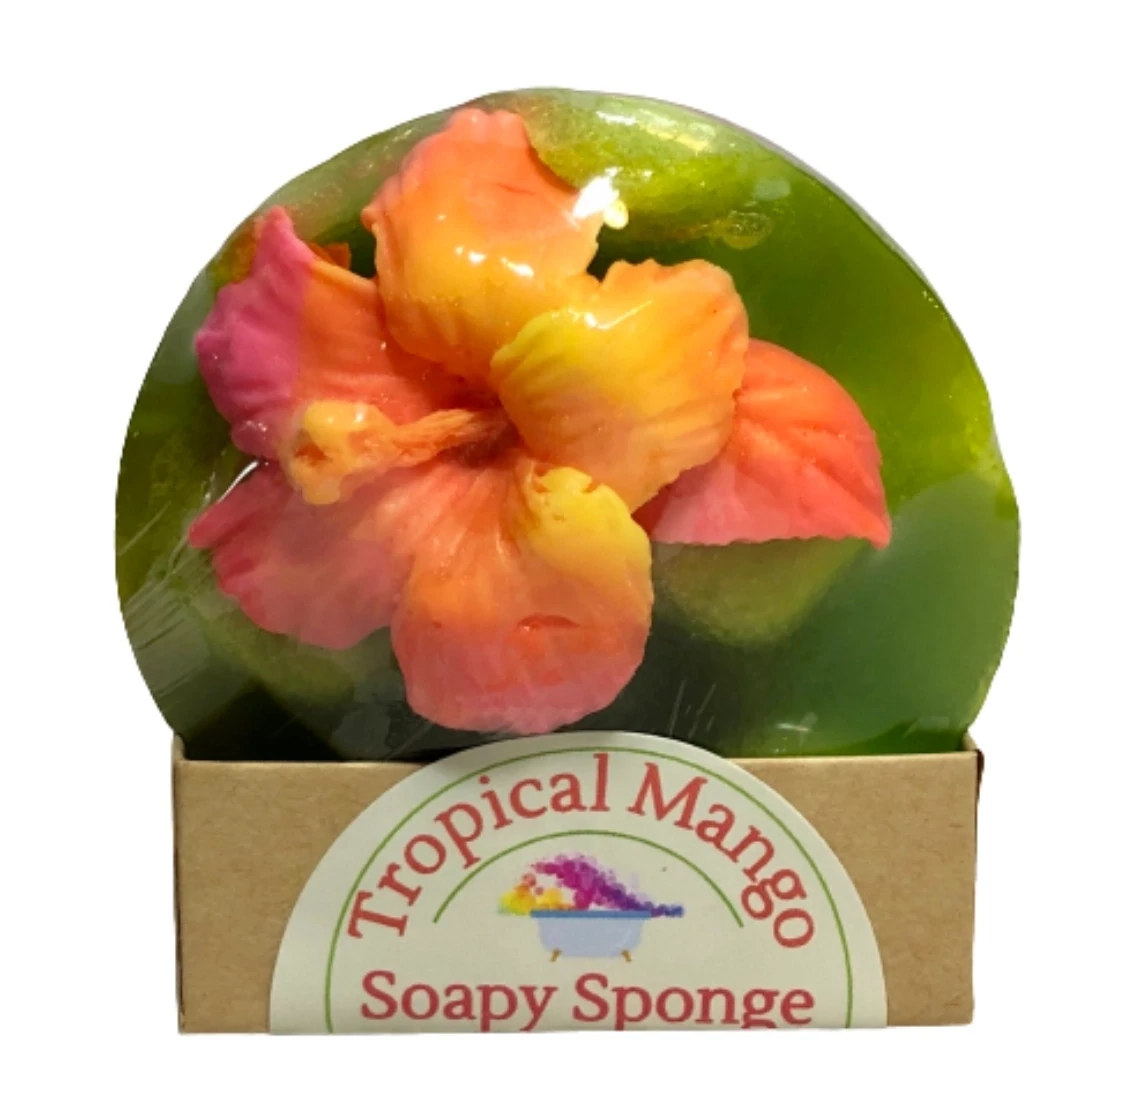 Soapy Sponge Tropical Mango +